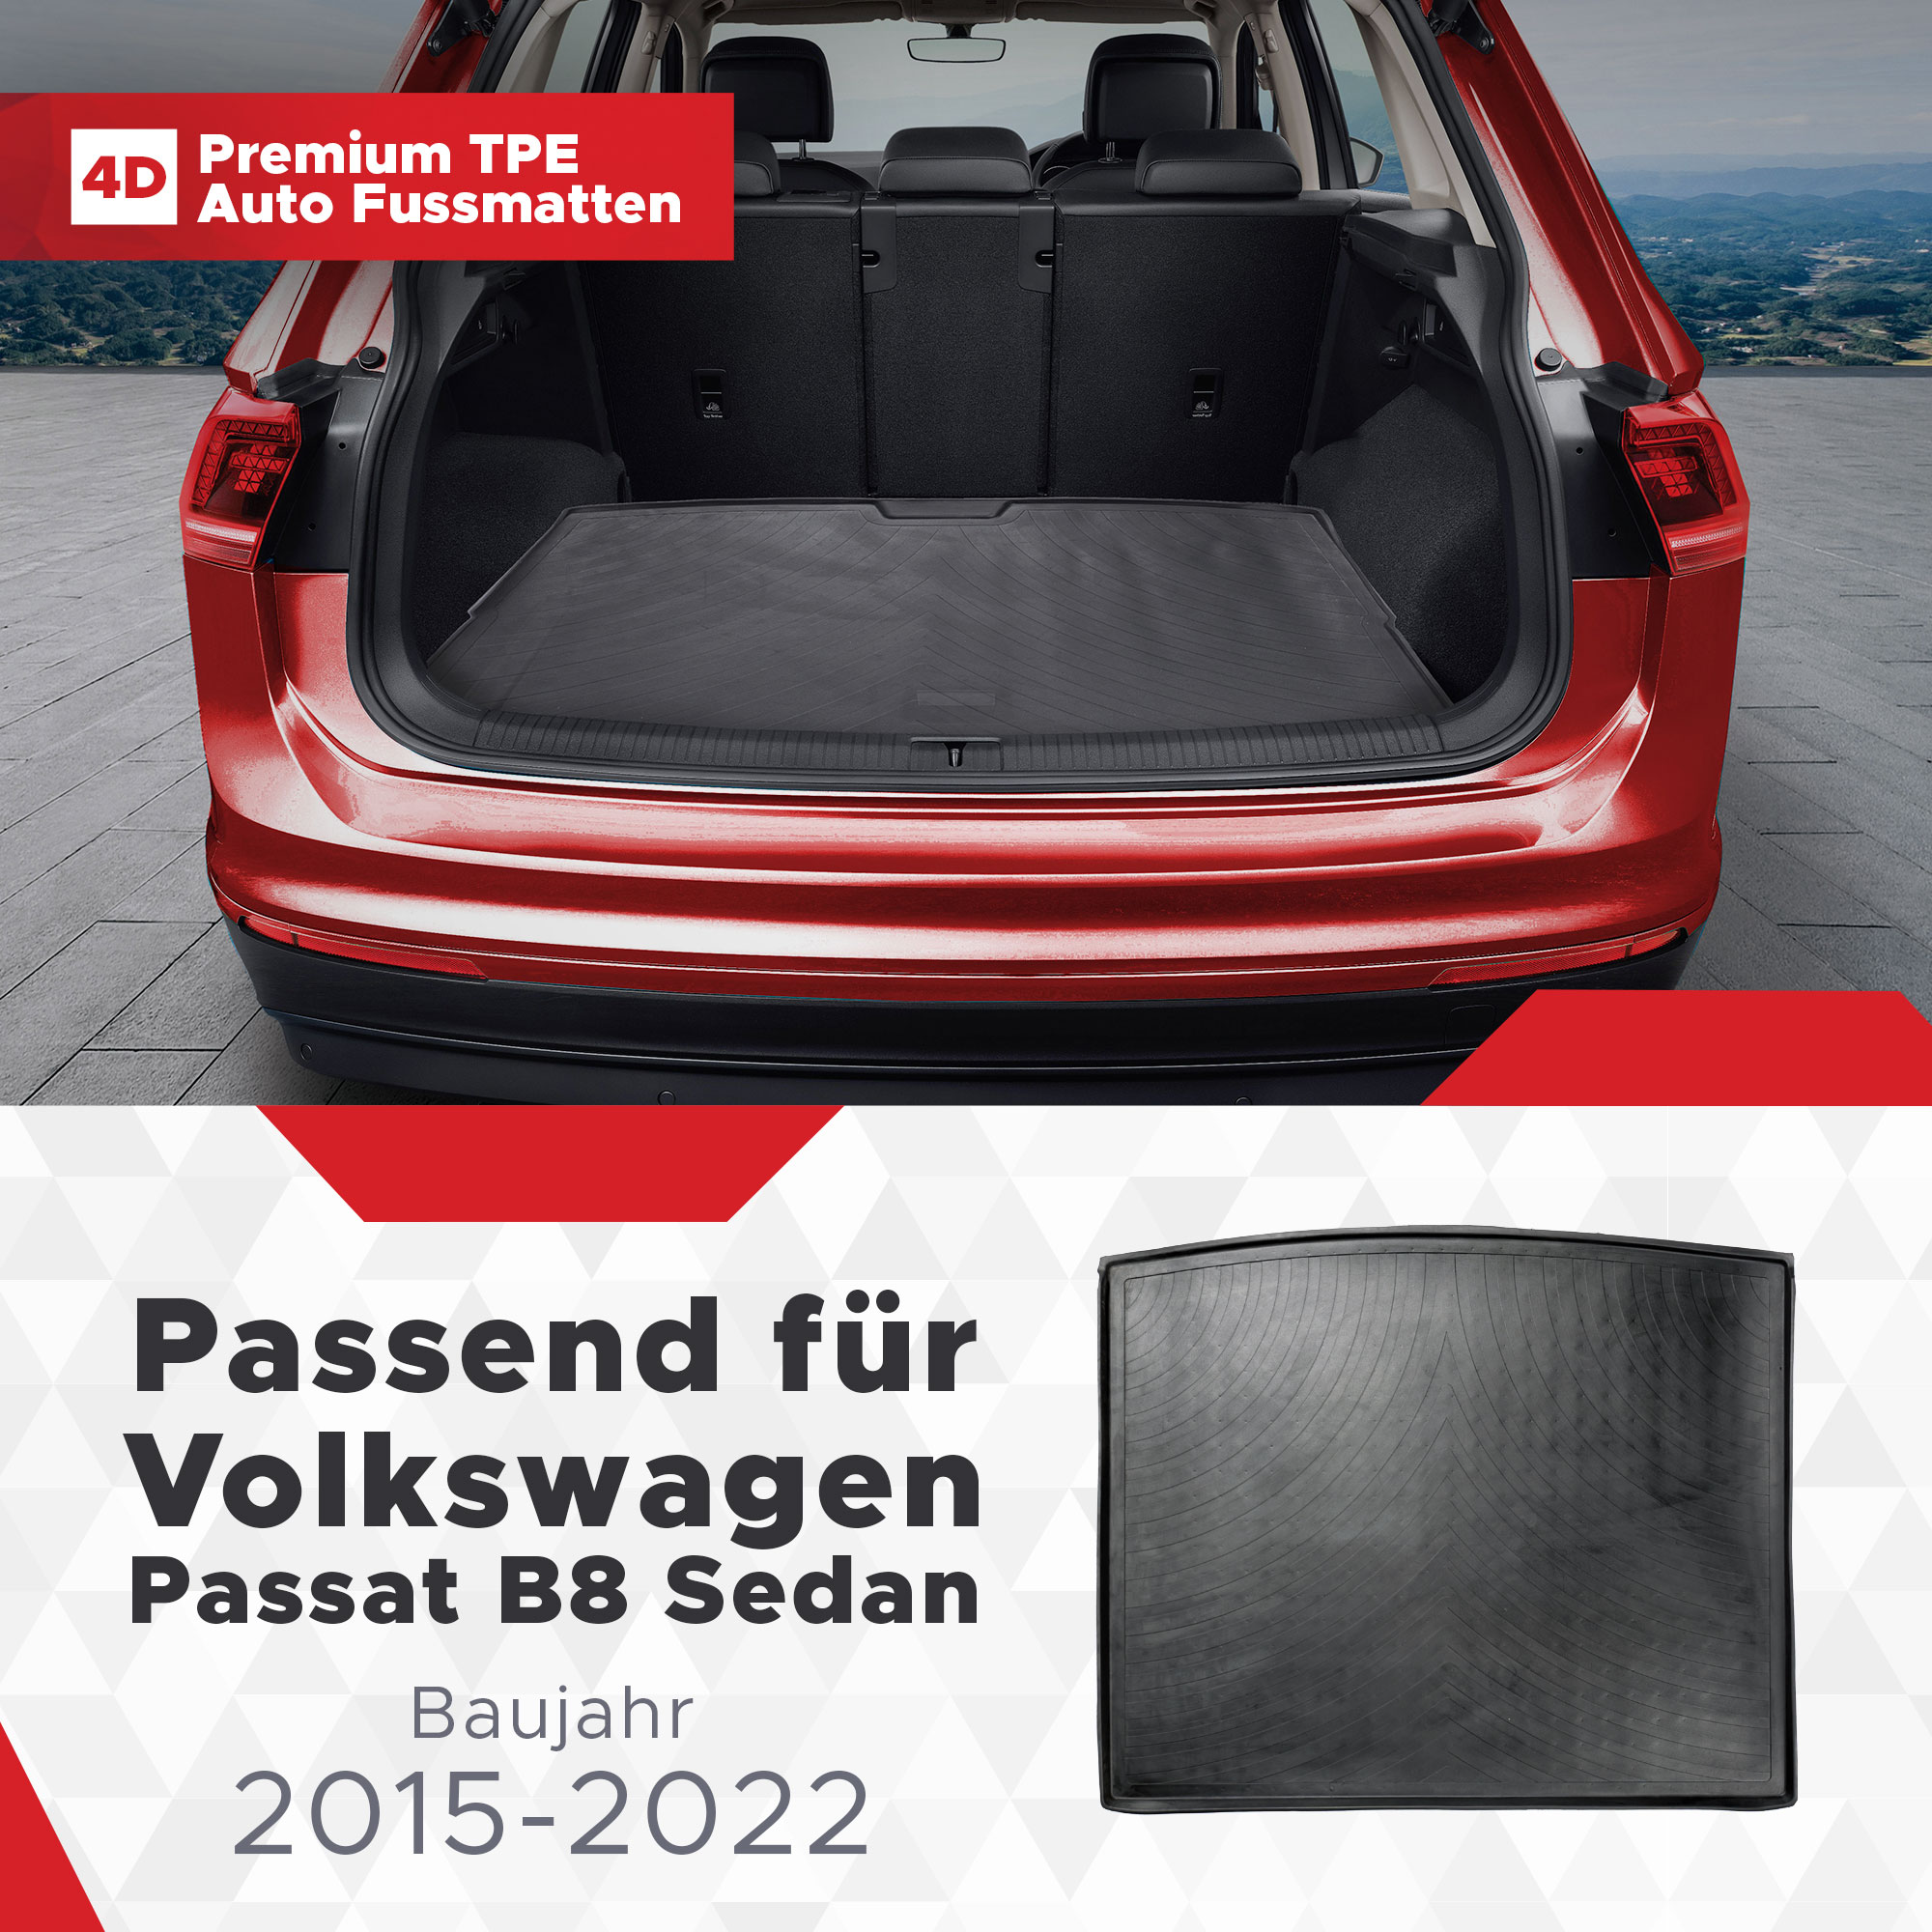 4D VW Passat B8 Kofferraummatte 2015-2022 - fussmattenprofi